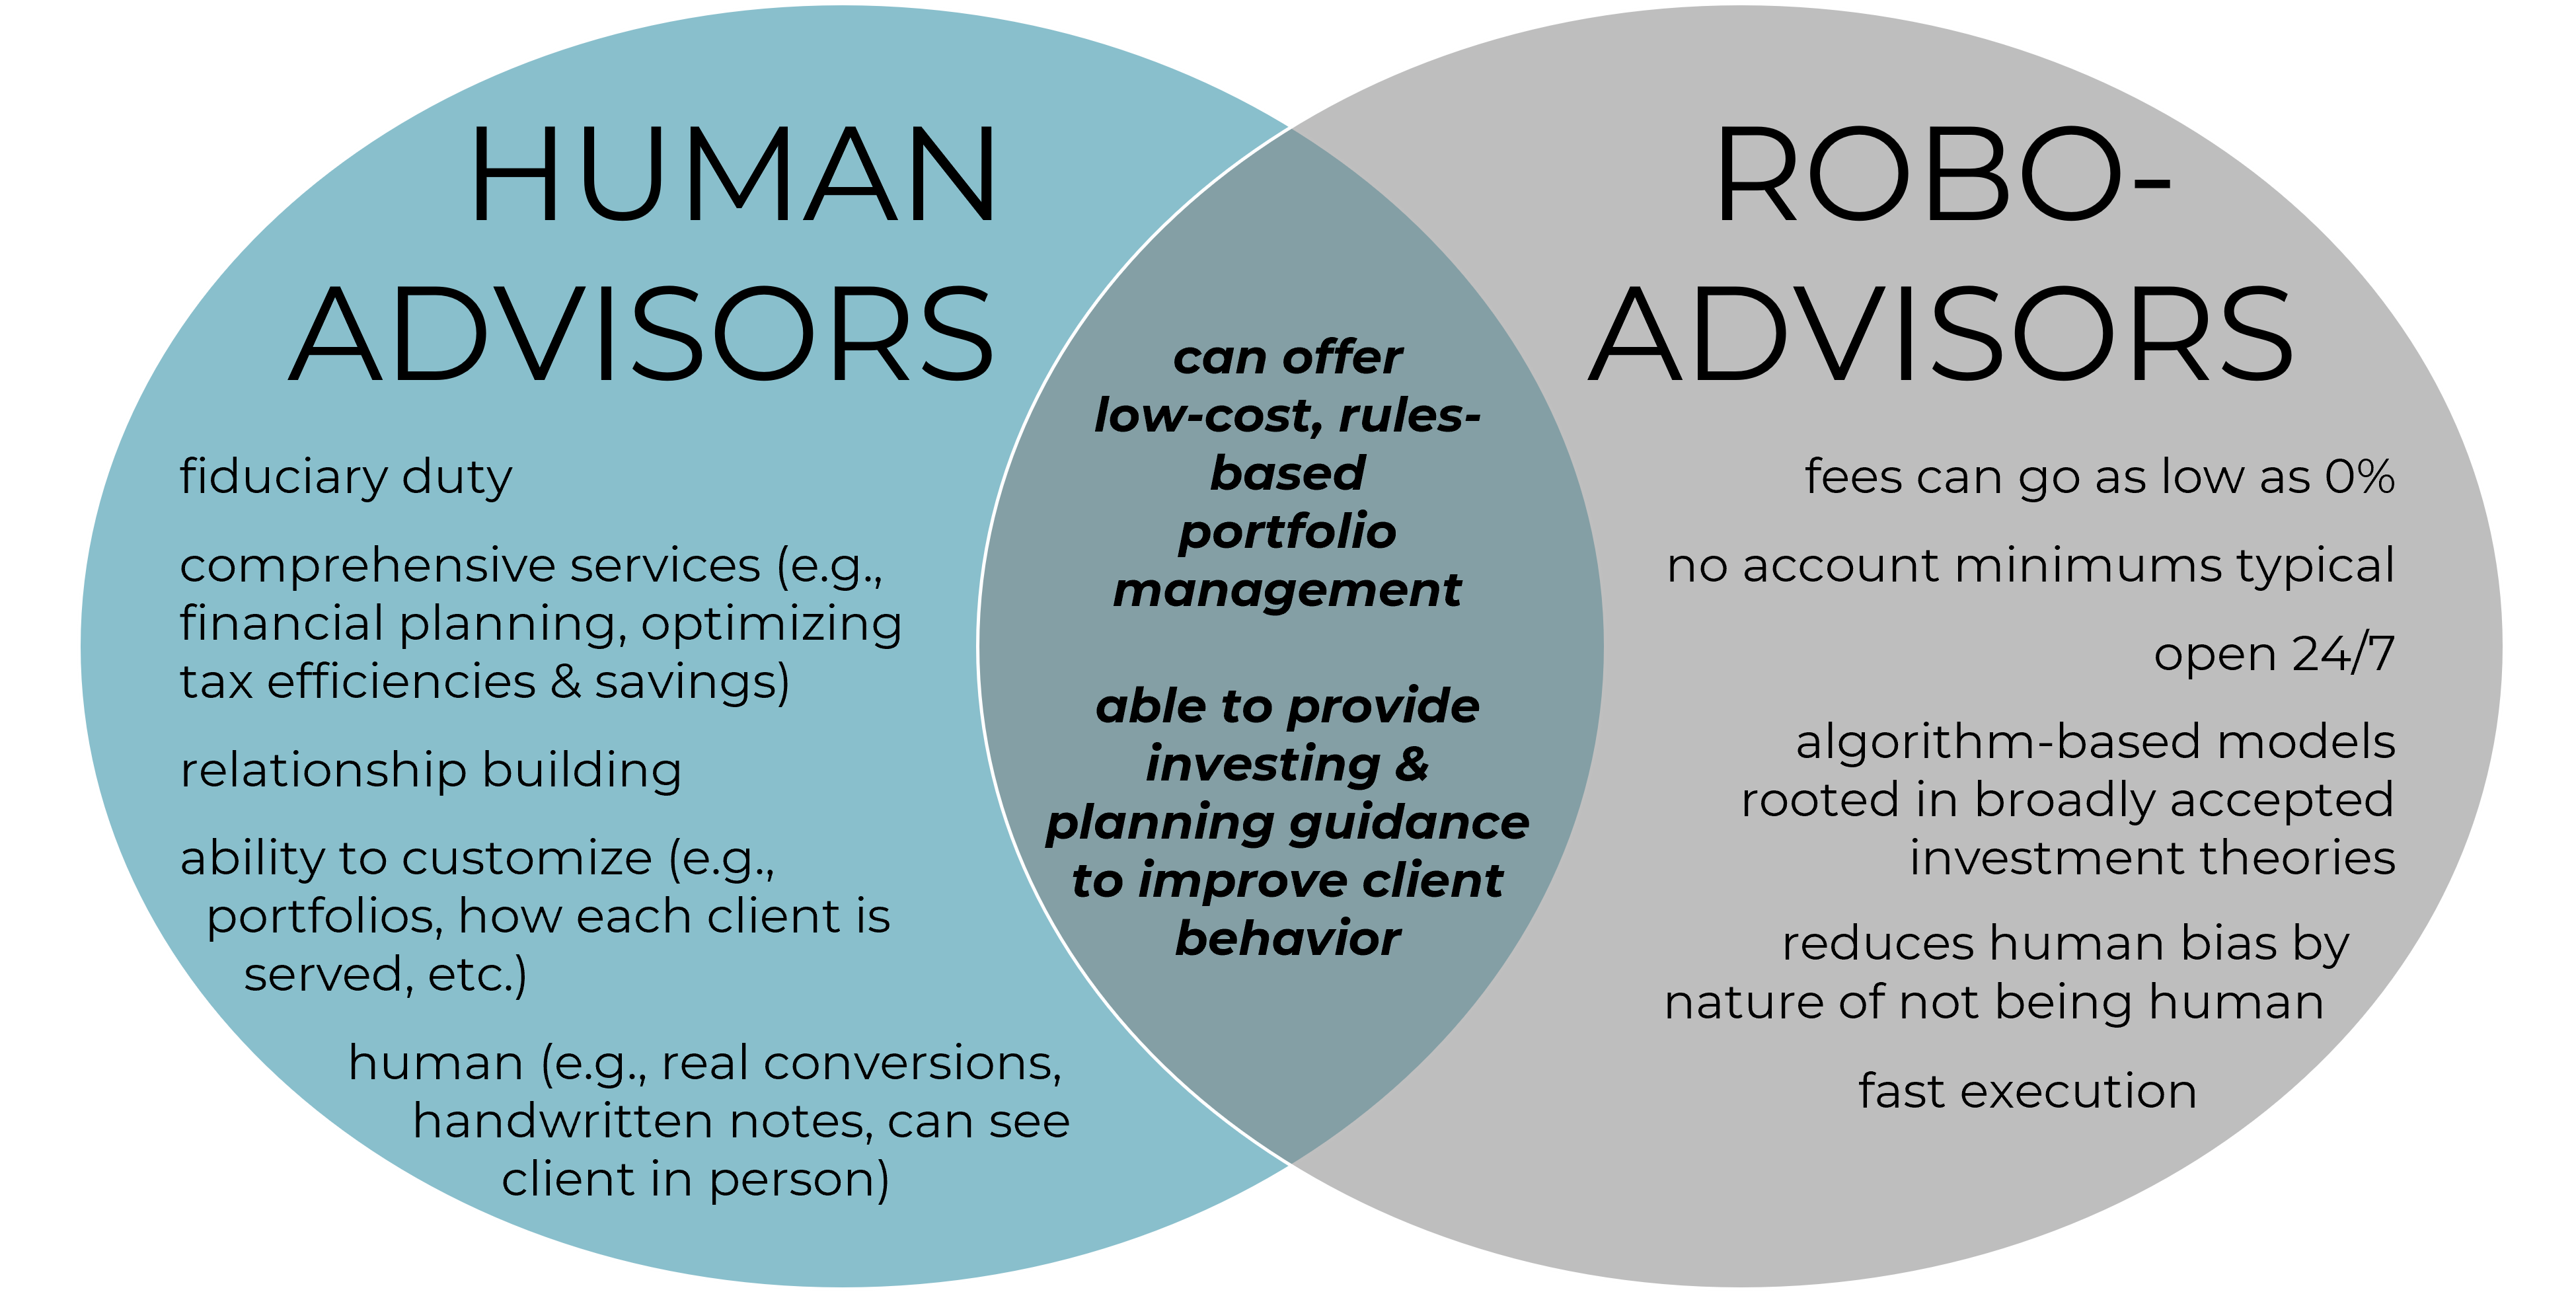 Venn diagram showing the attributes of human advisors and robo-advisors